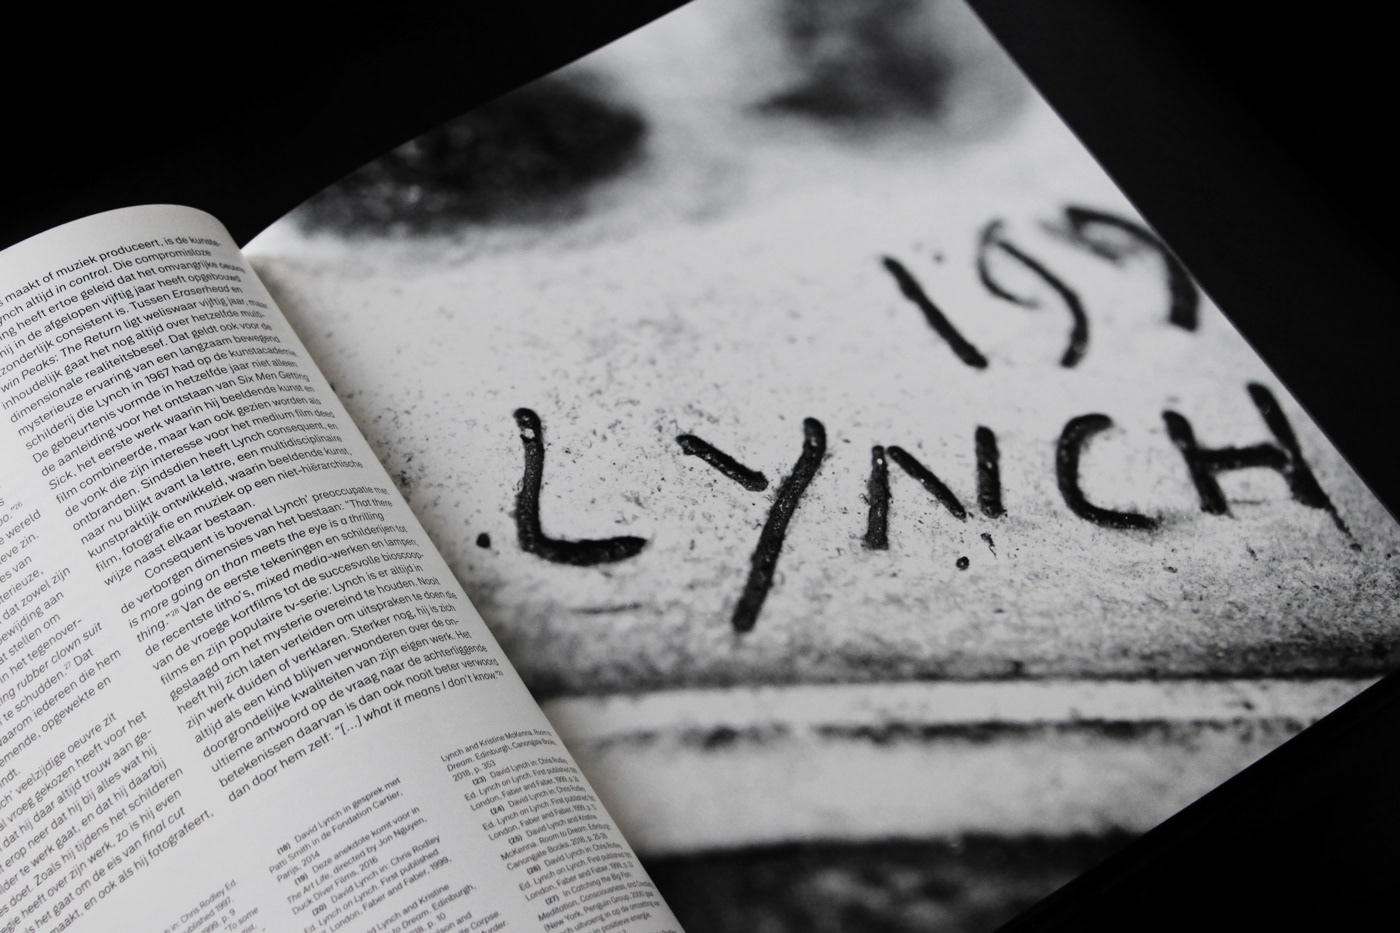 David Lynch book design editorial art book STUDIO DAVID LYNCH cover design black exhibition catalogue Paintings